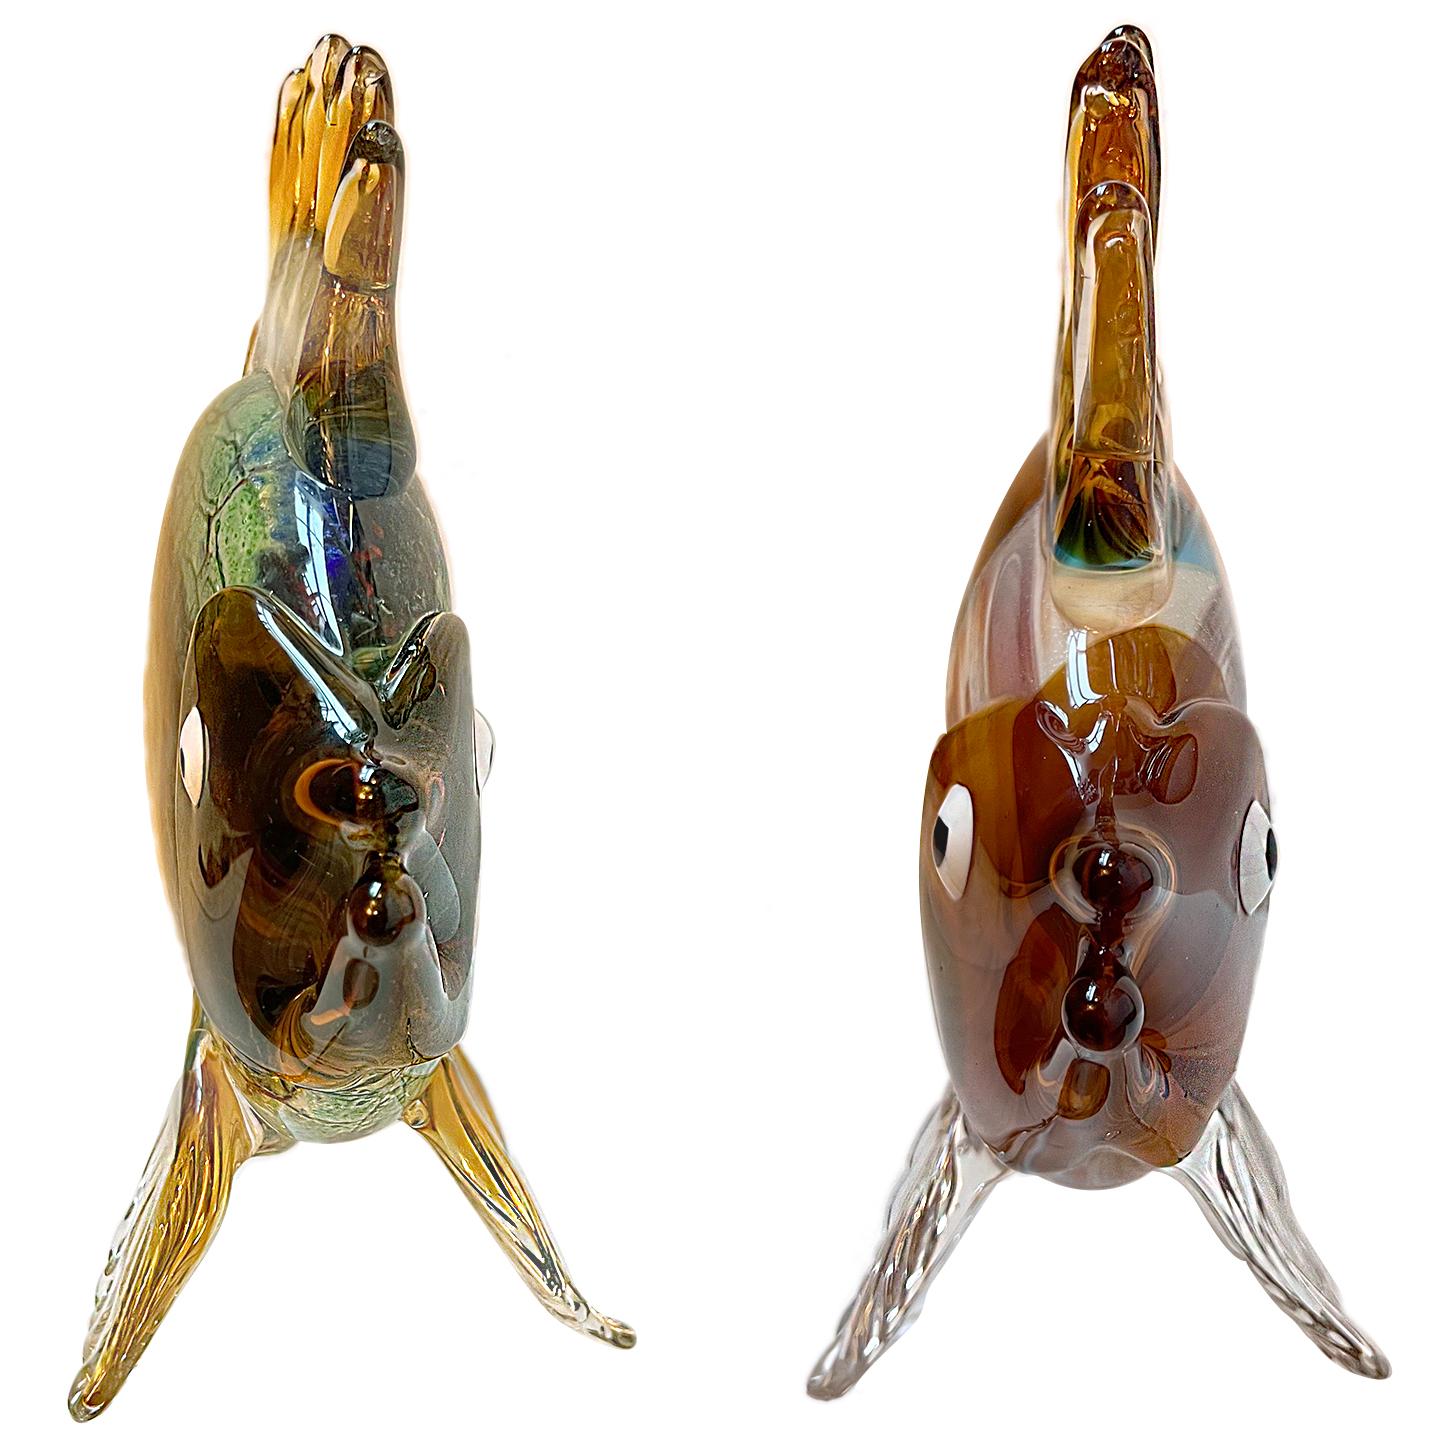 Pair of circa 1960's Italian blown glass fish.

Measurements:
Height: 11.25